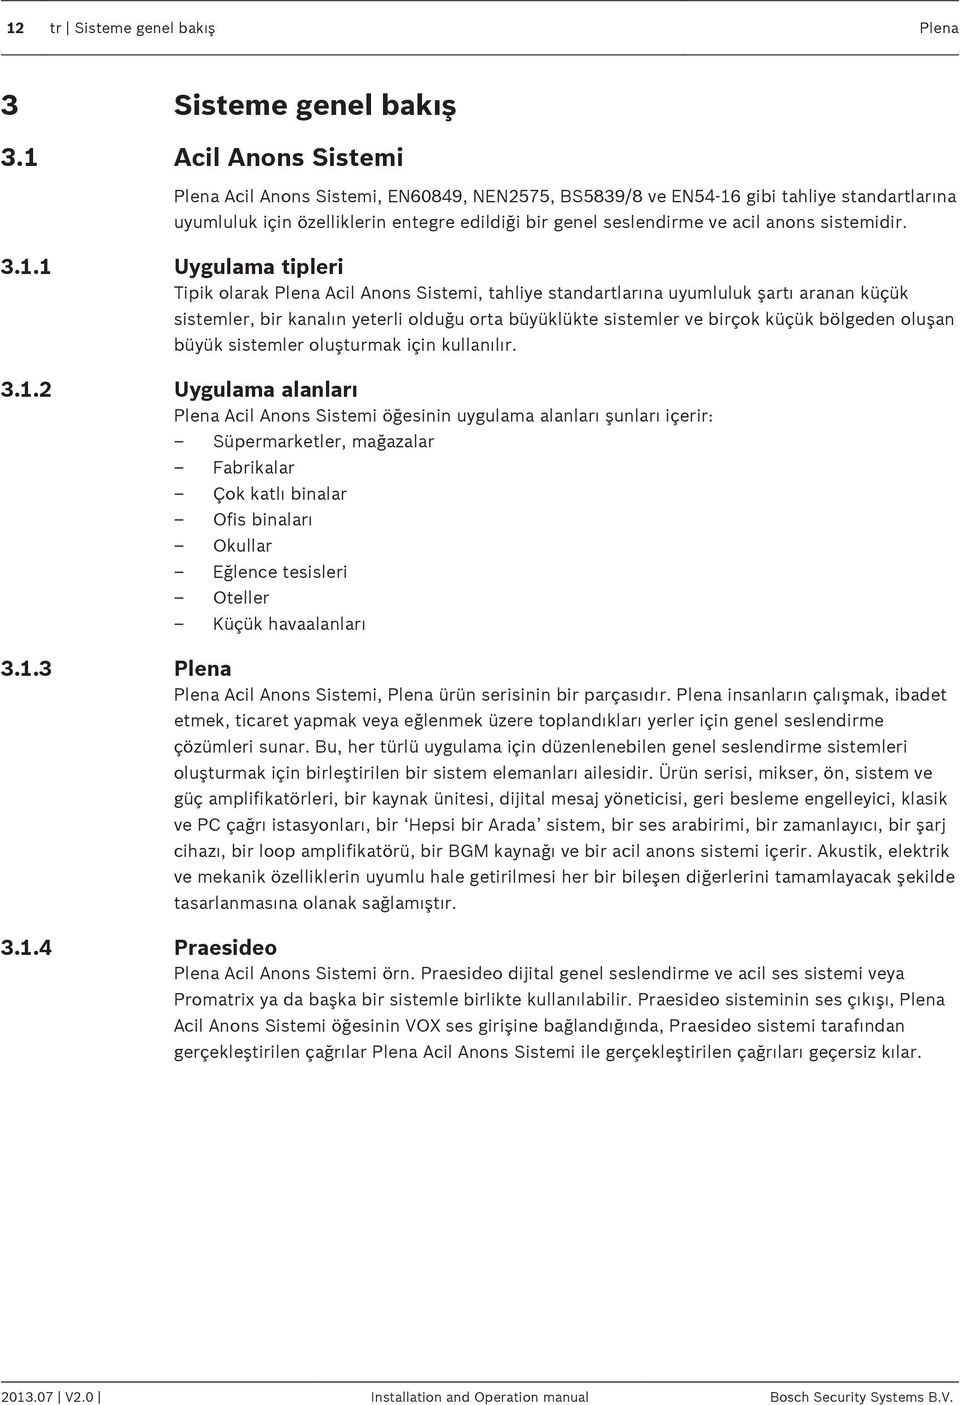 Plena. Voice Alarm System. tr Installation and Operation manual - PDF  Ücretsiz indirin